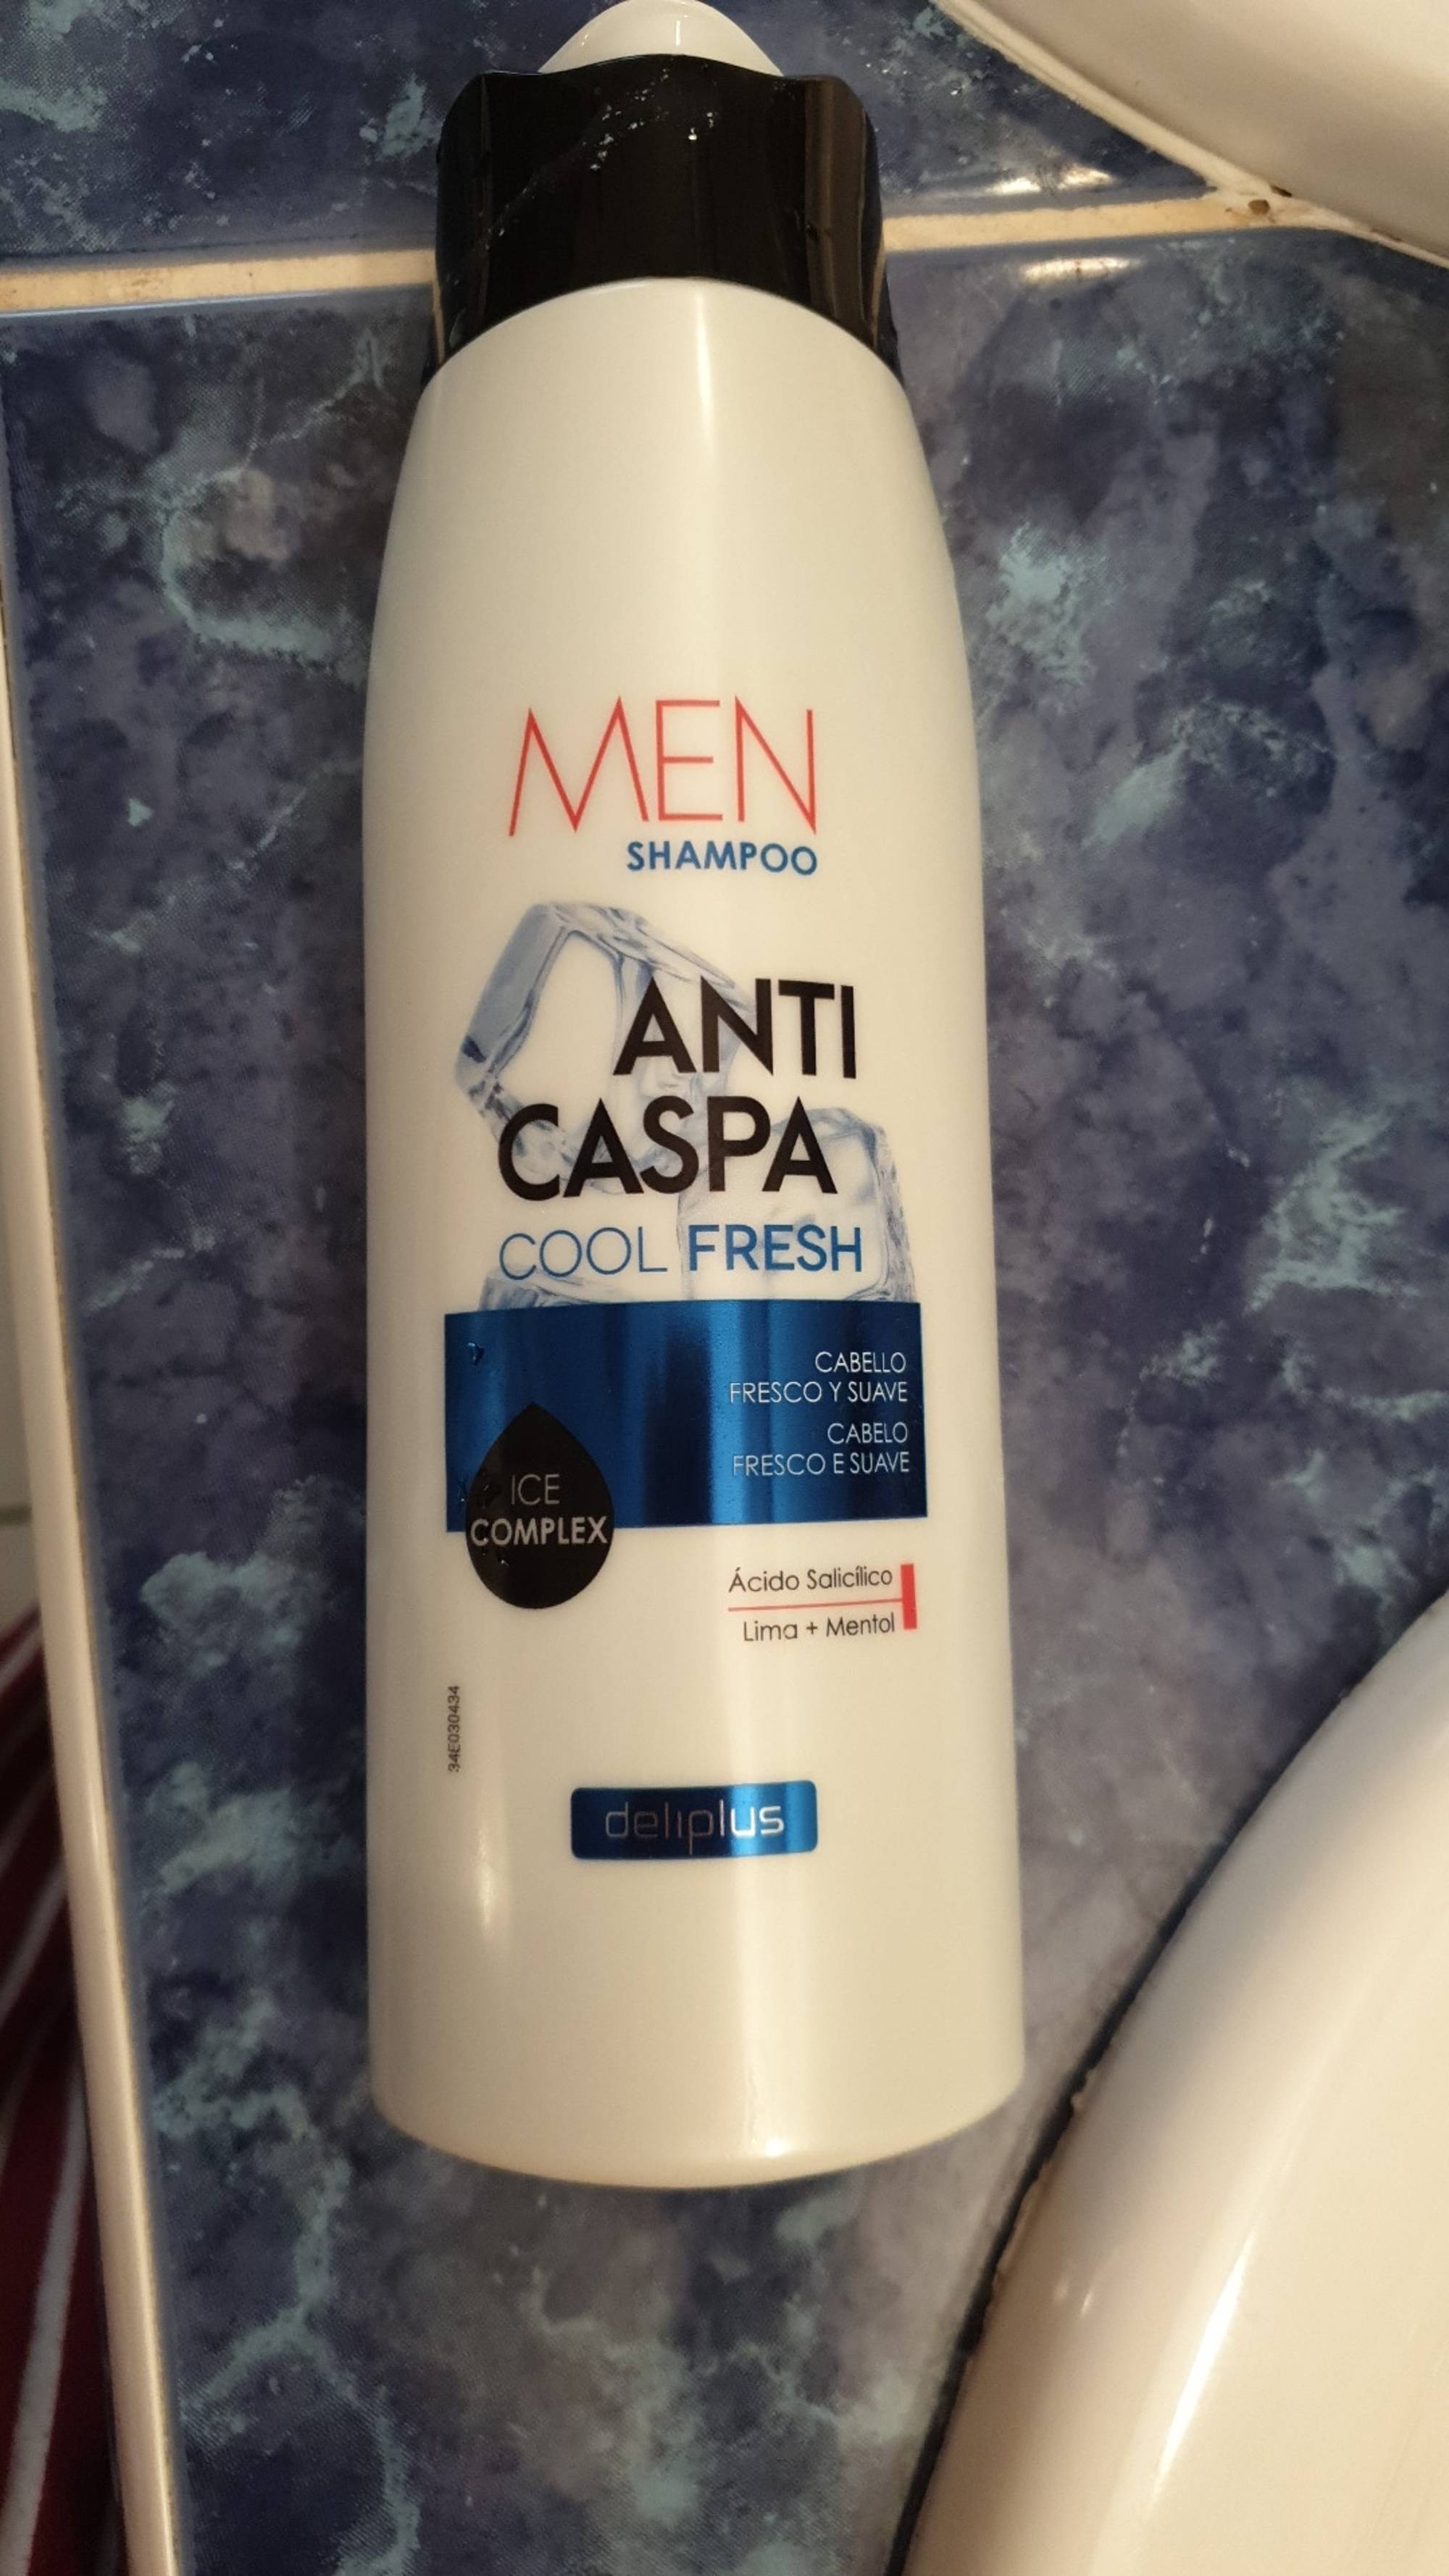 DELIPLUS - Men - Shampoo Anti caspa